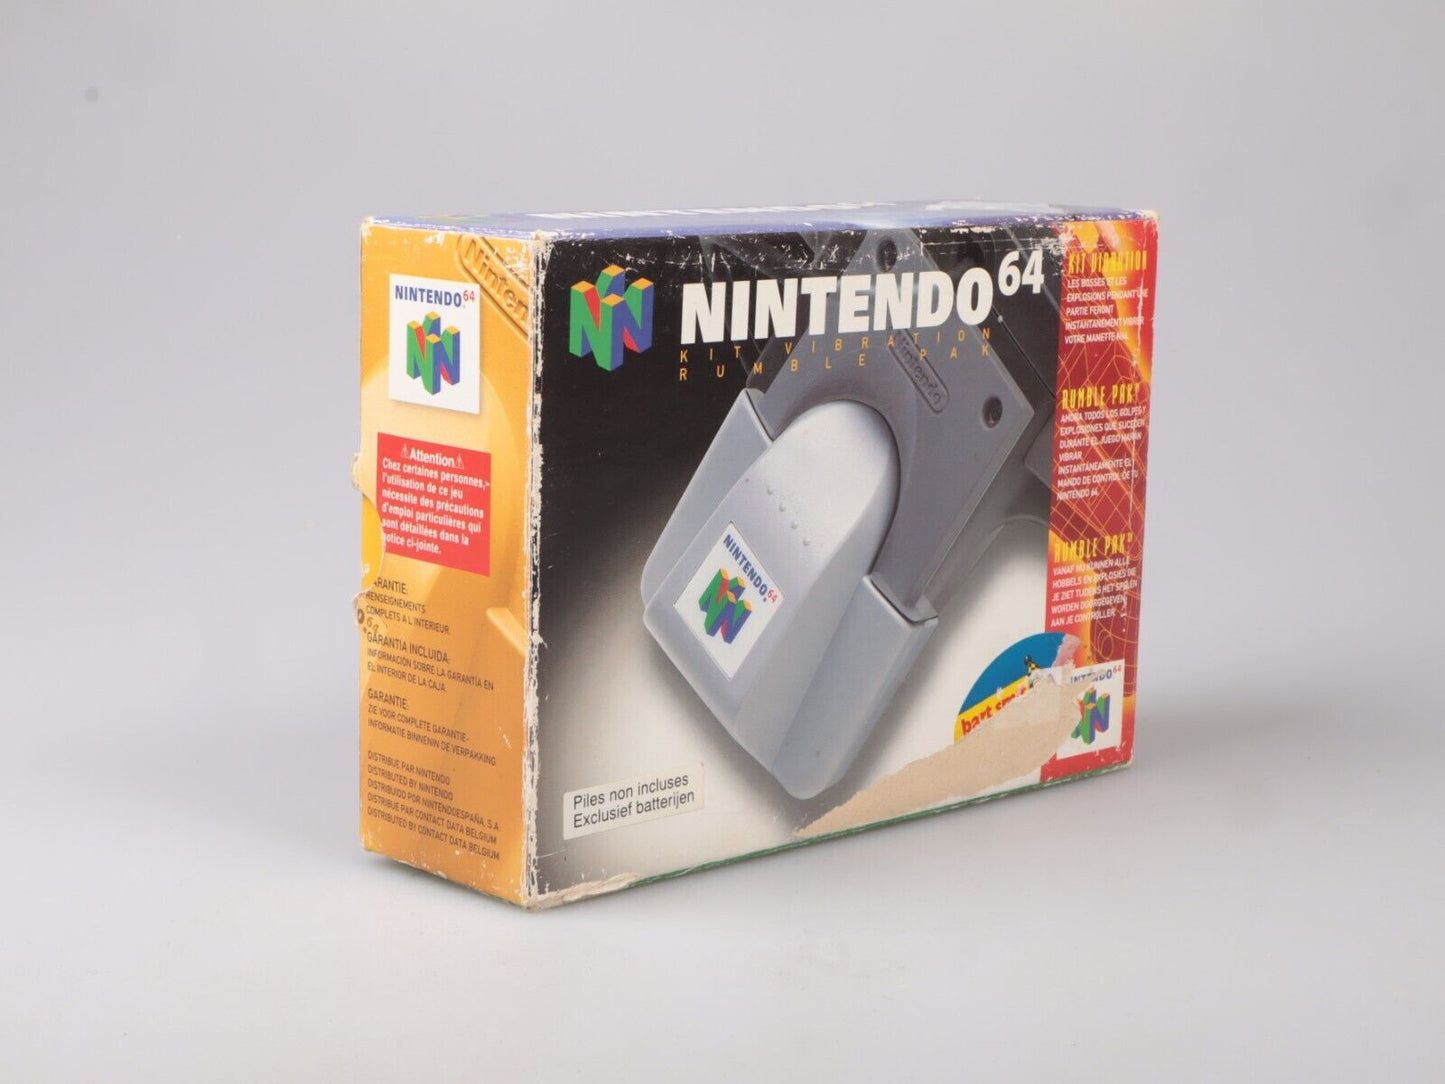 N64 | Nintendo 64 Rumble Pak | In doos | Officiële Nintendo 64 